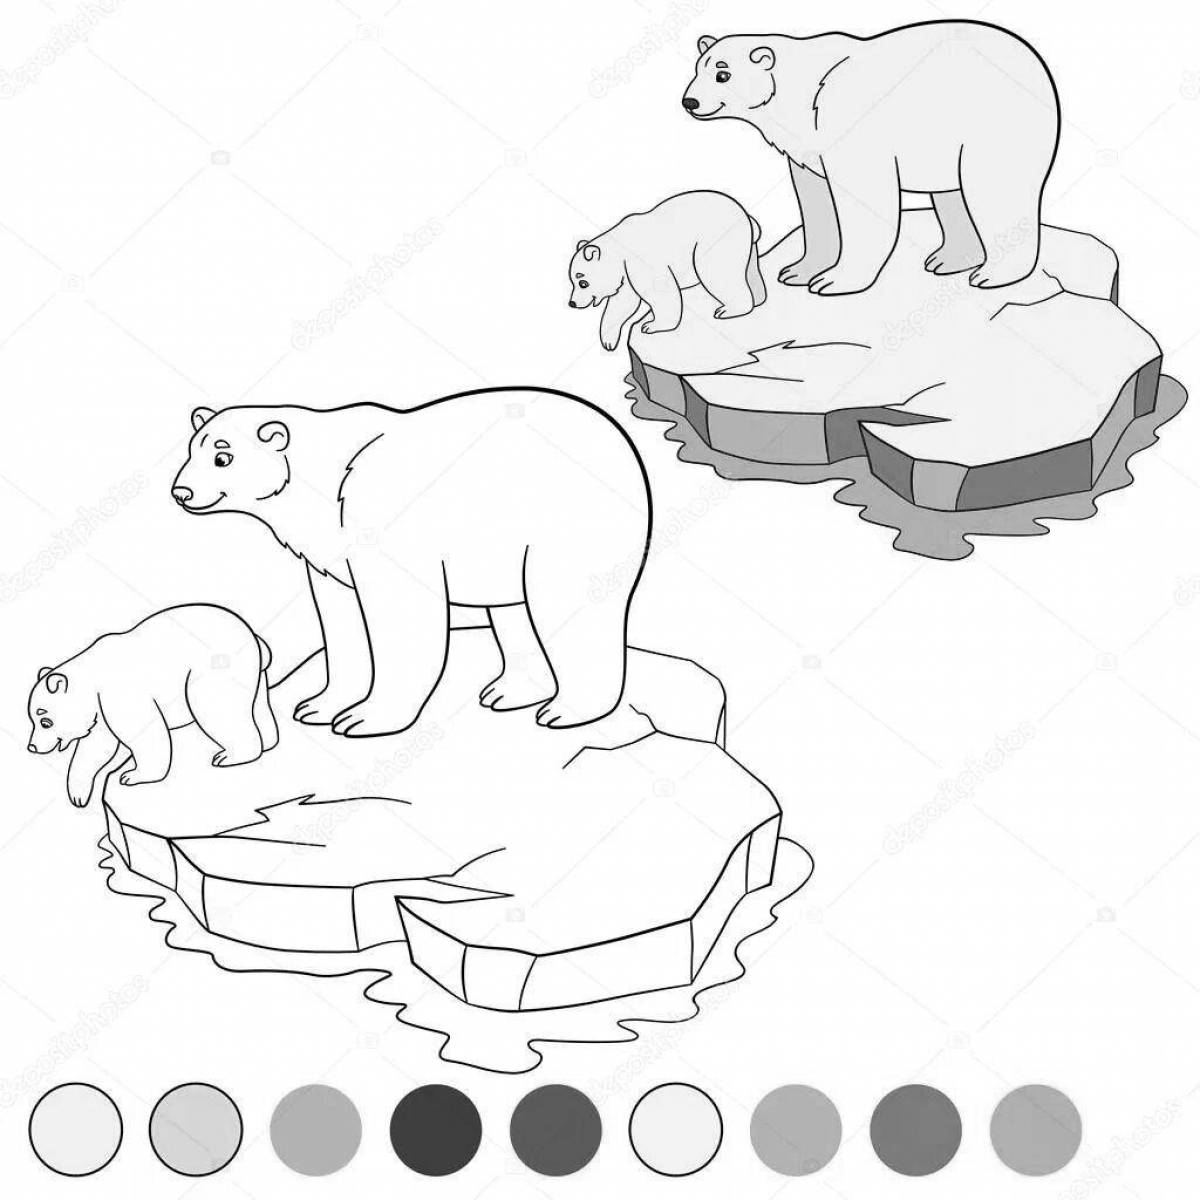 Ice polar bear coloring page